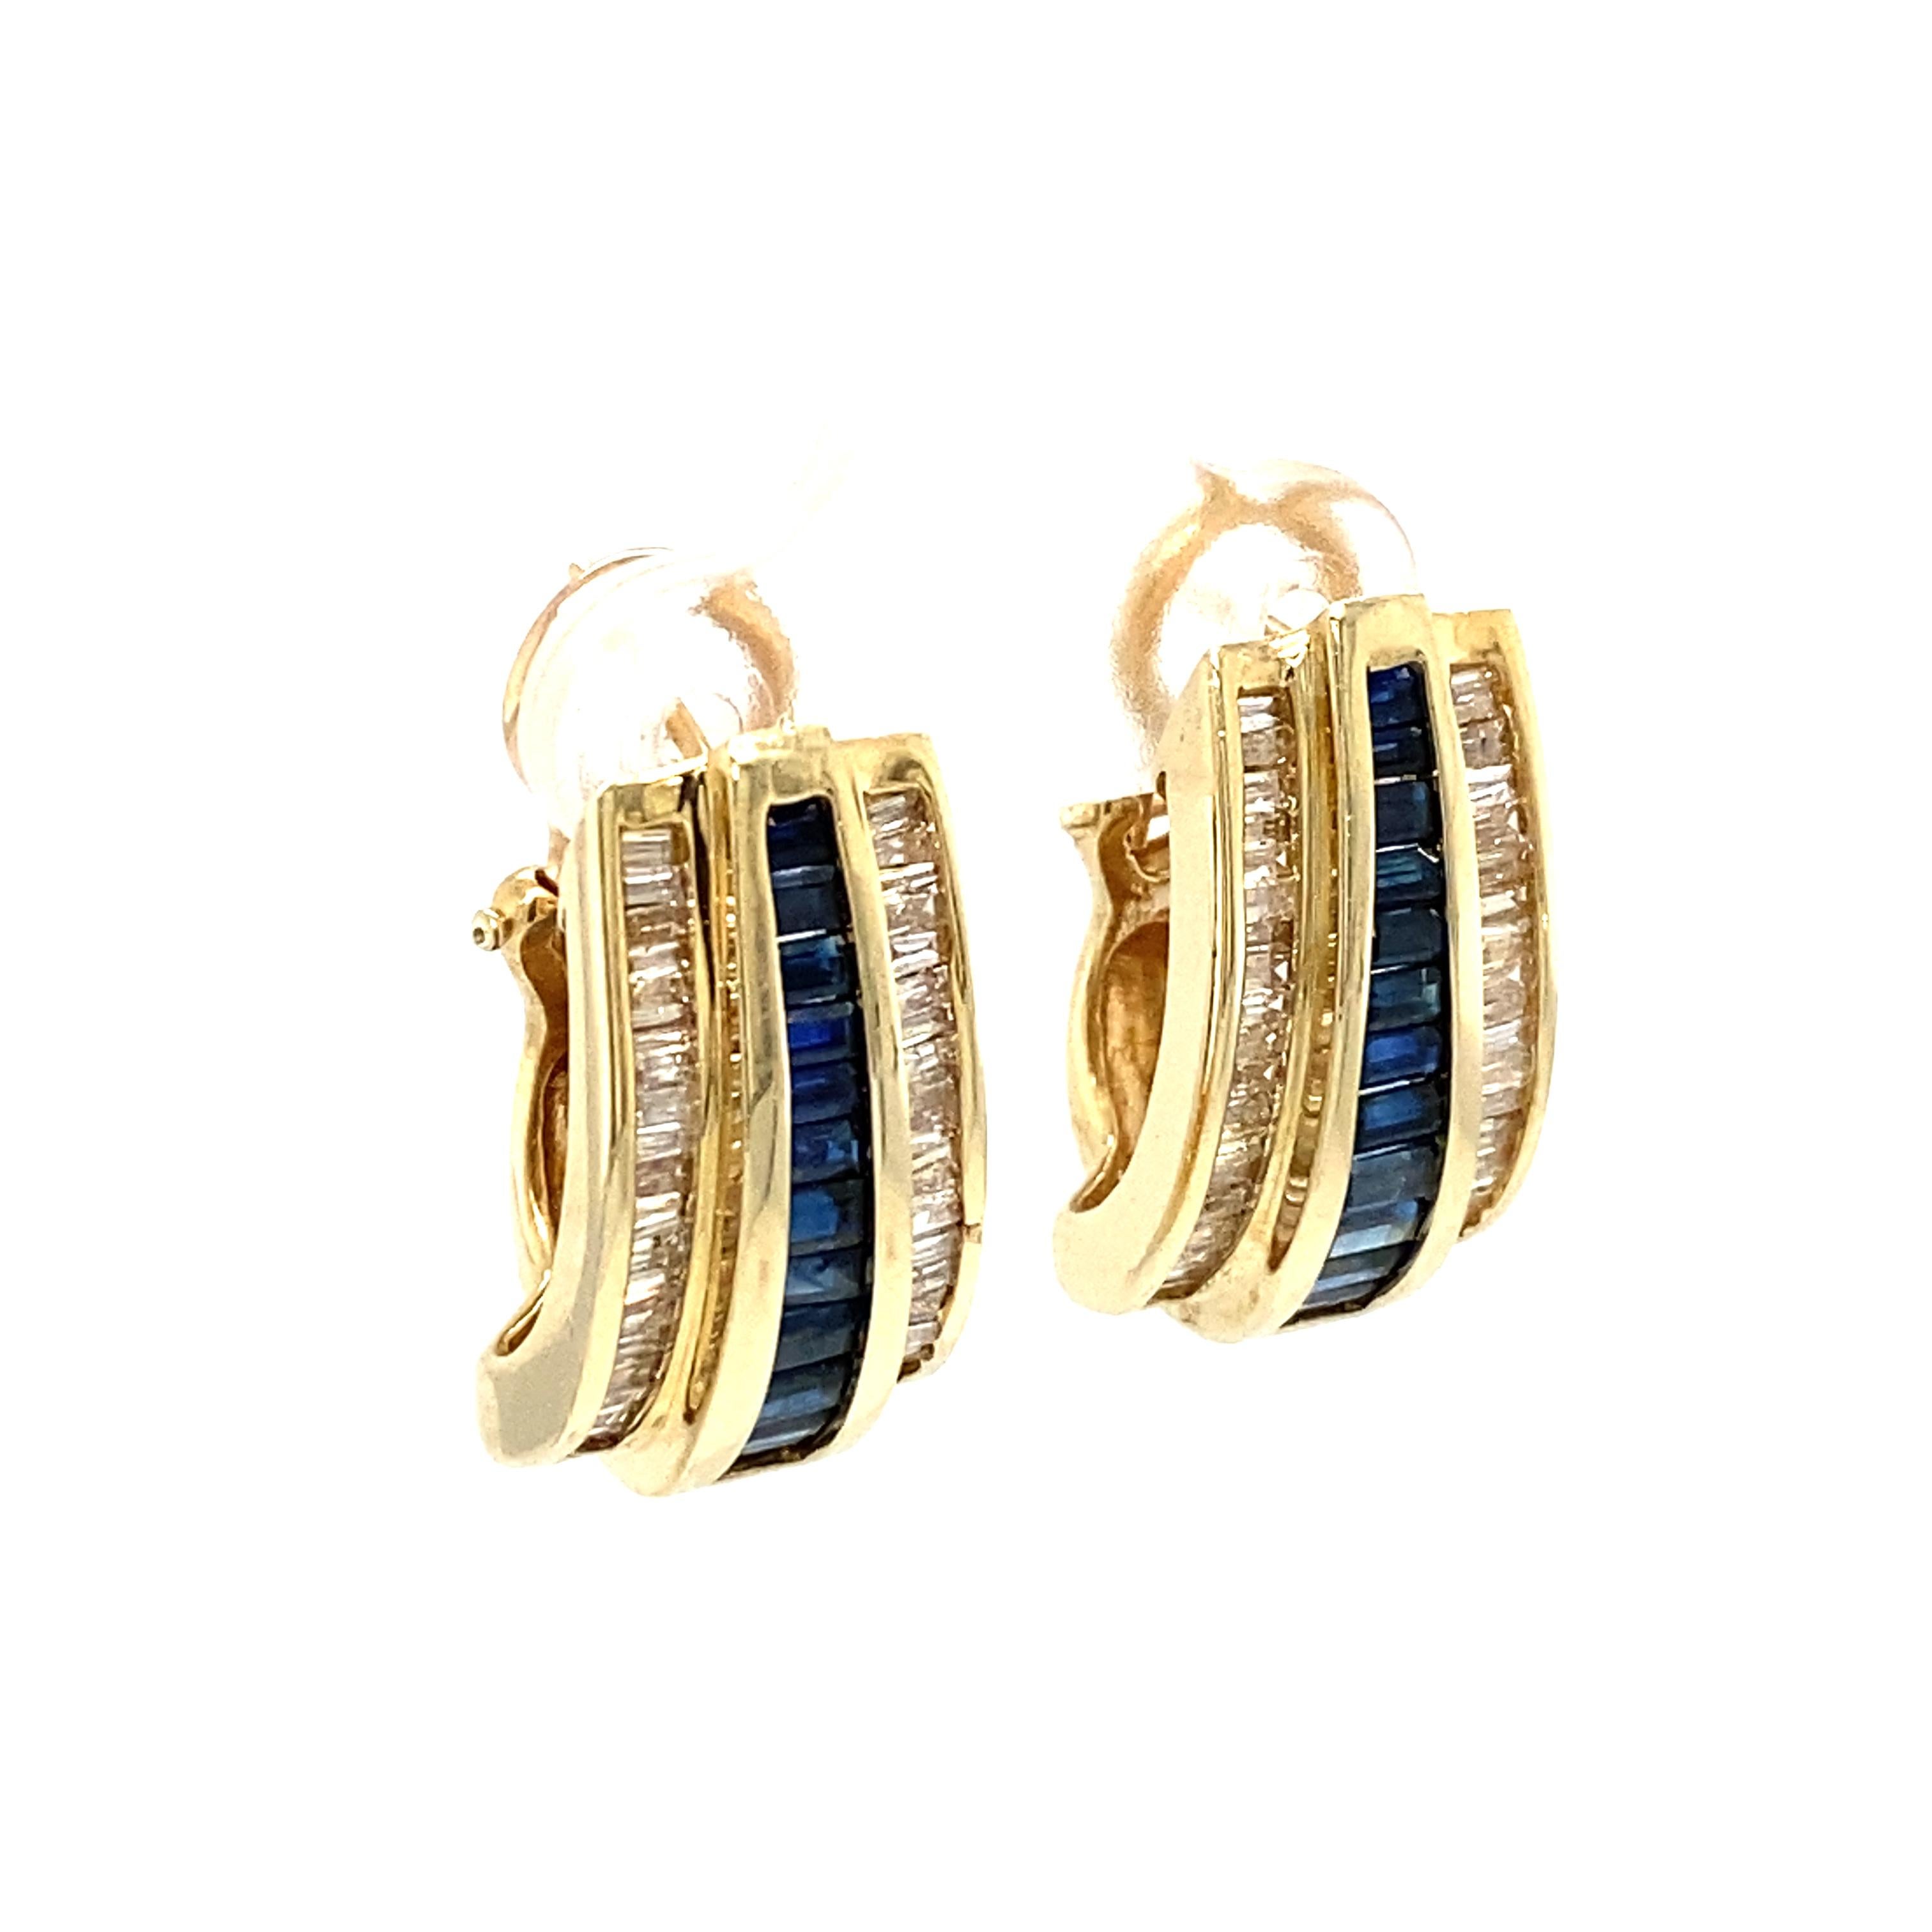 Retro Circa 1950s Baguette Sapphire and Diamond J Hoop Earrings in 14 Karat Gold For Sale